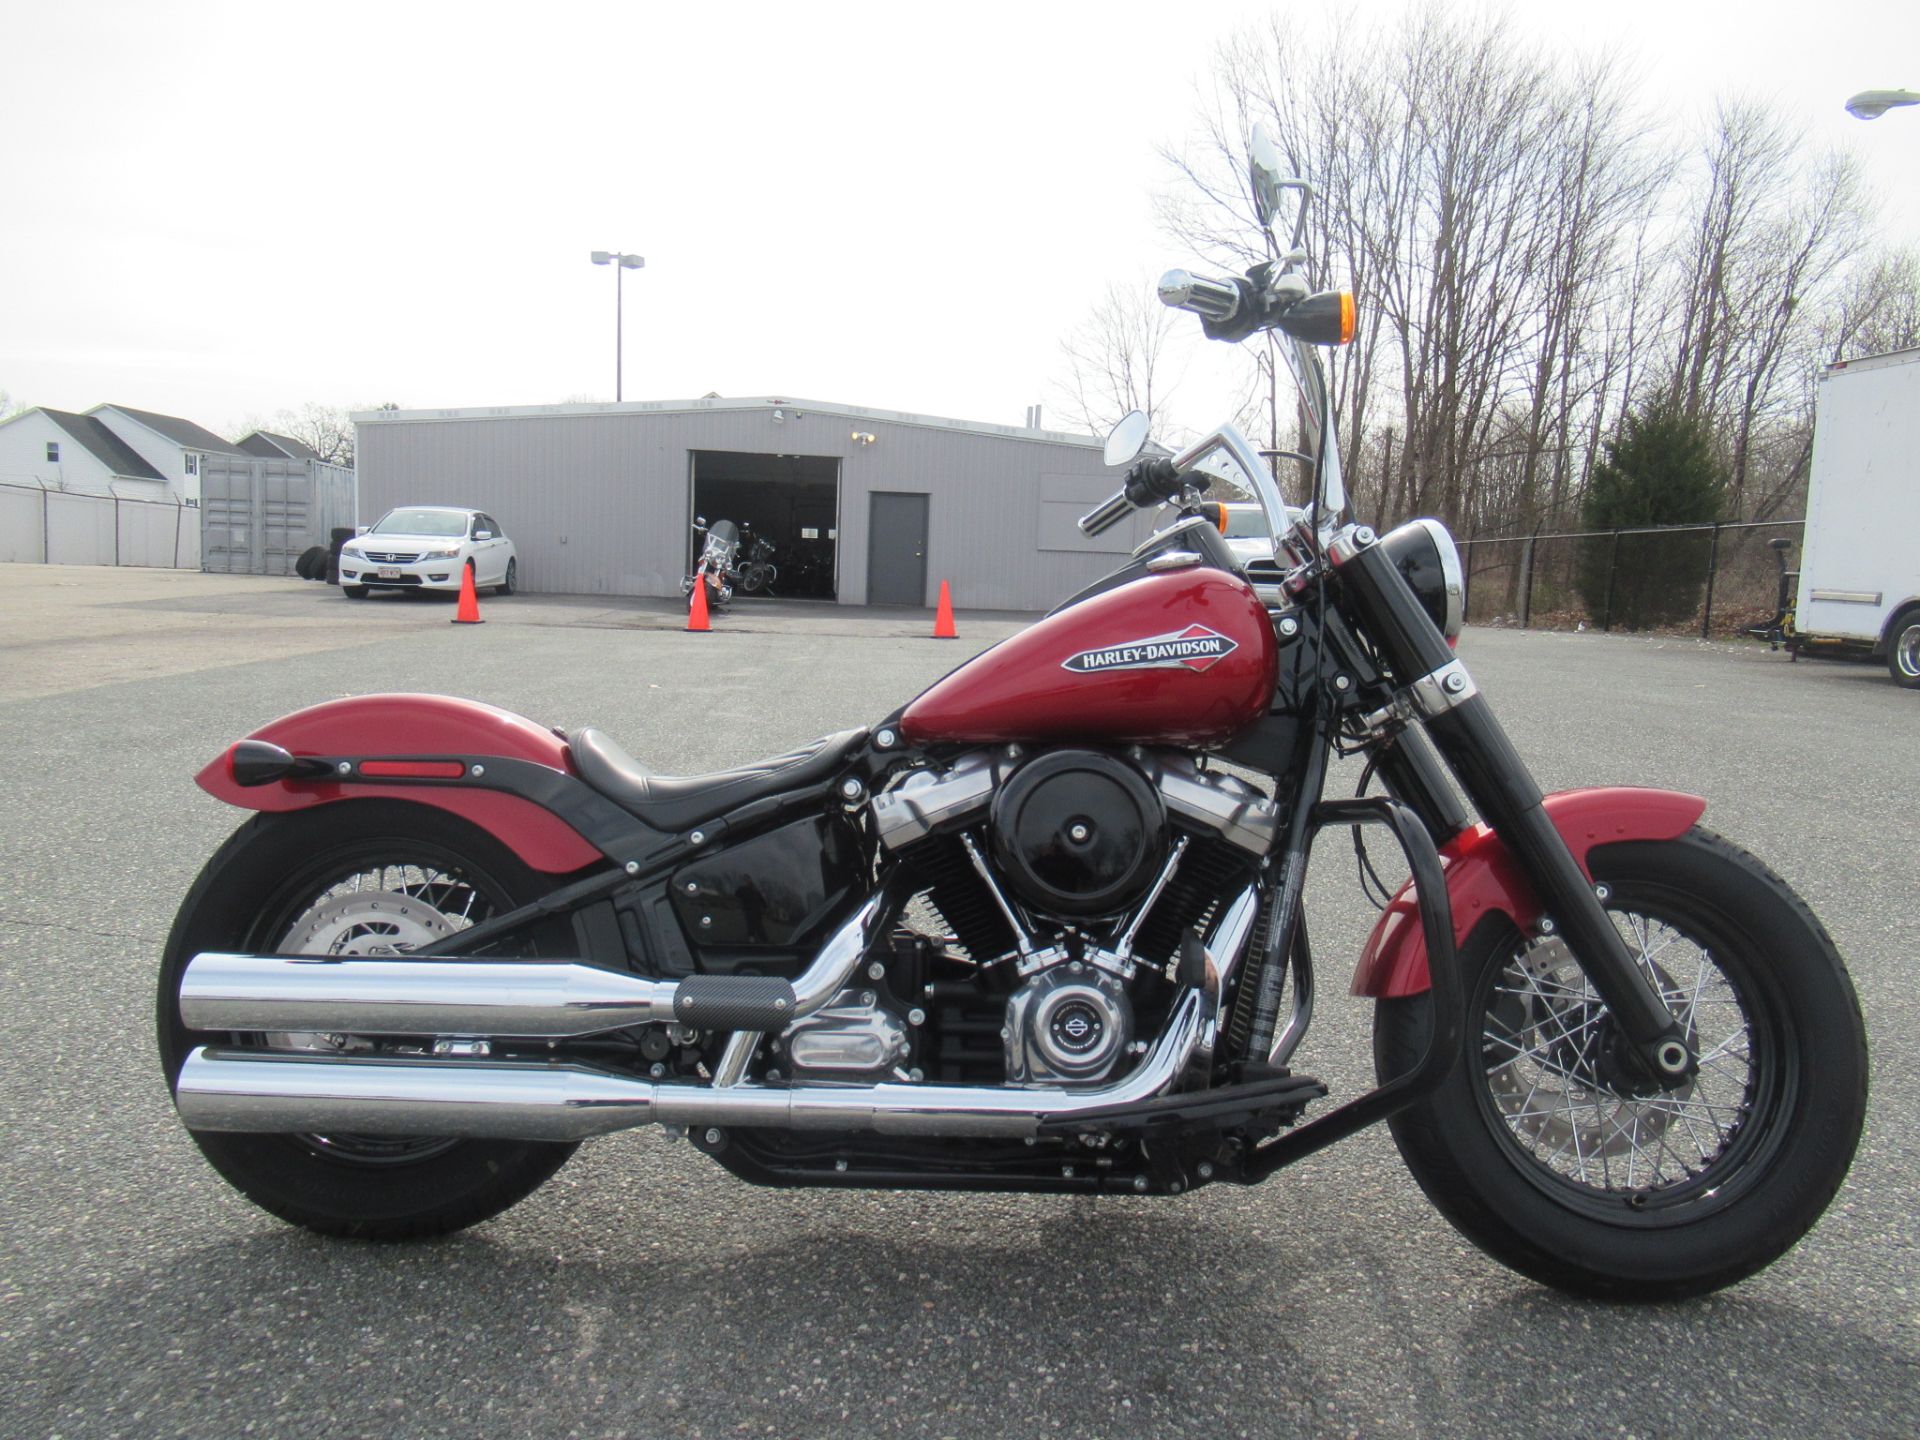 2018 Harley-Davidson Softail Slim® 107 in Springfield, Massachusetts - Photo 1